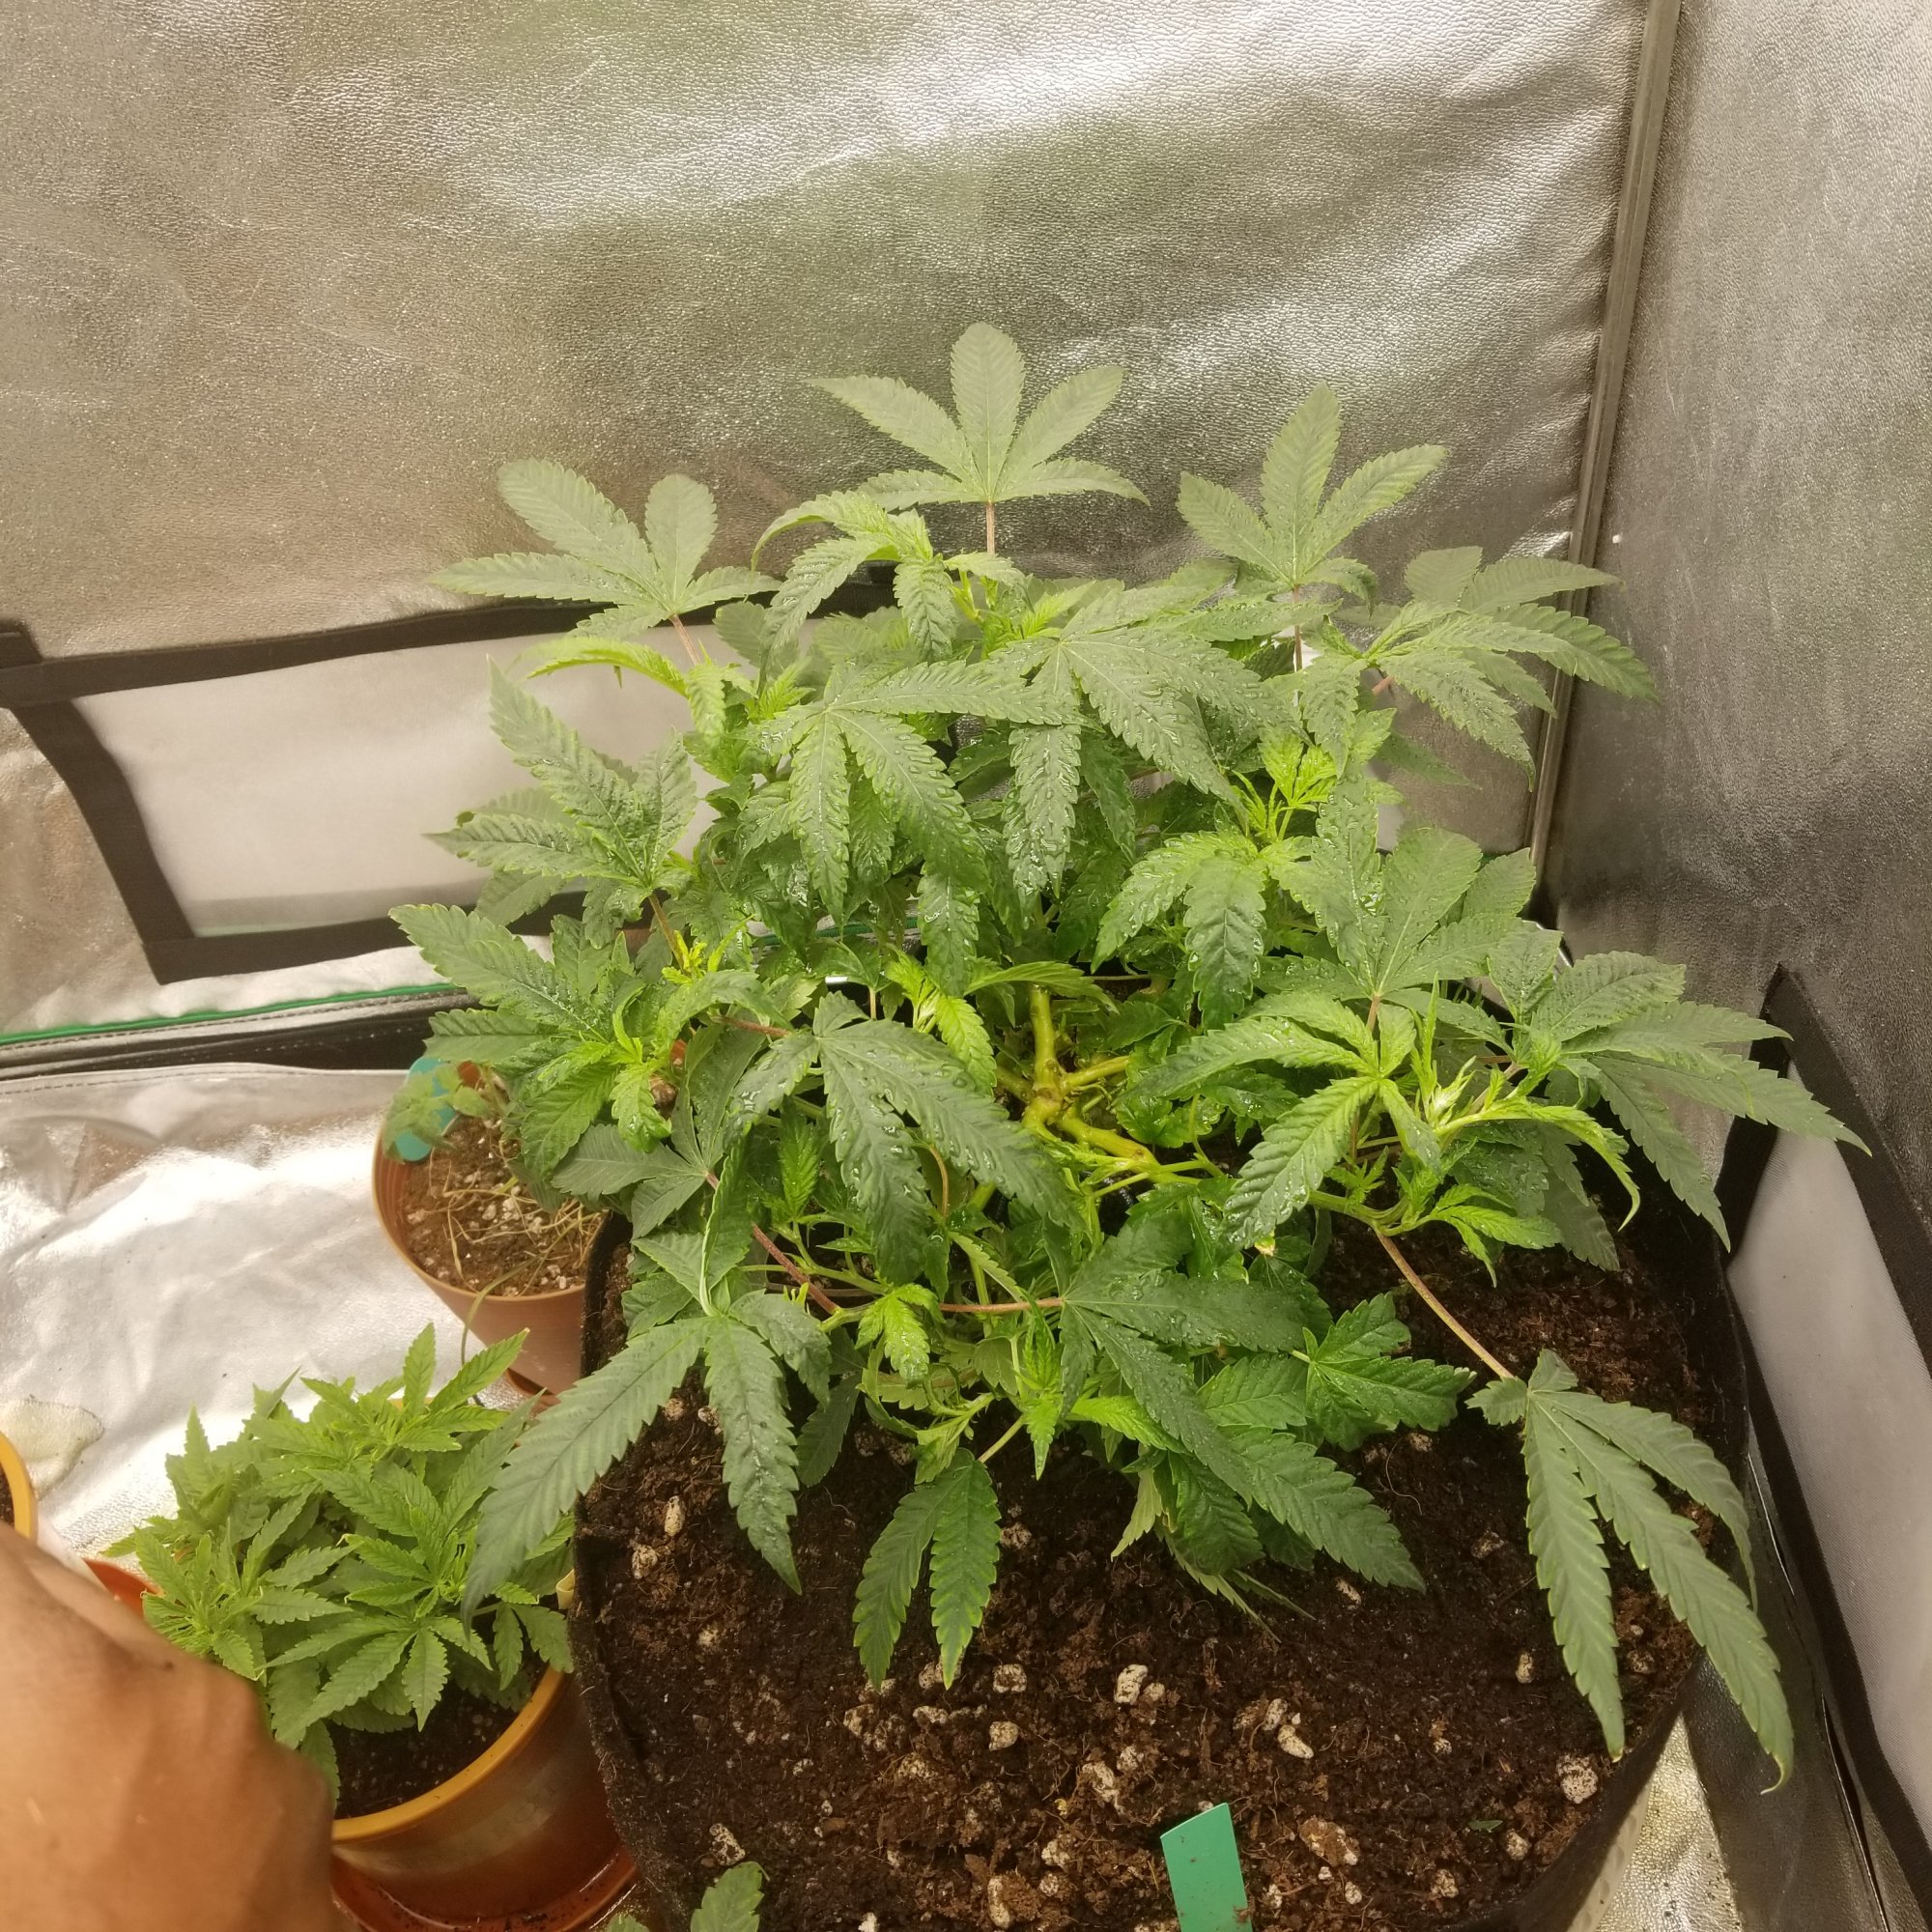 Help split stem straight down middle 3